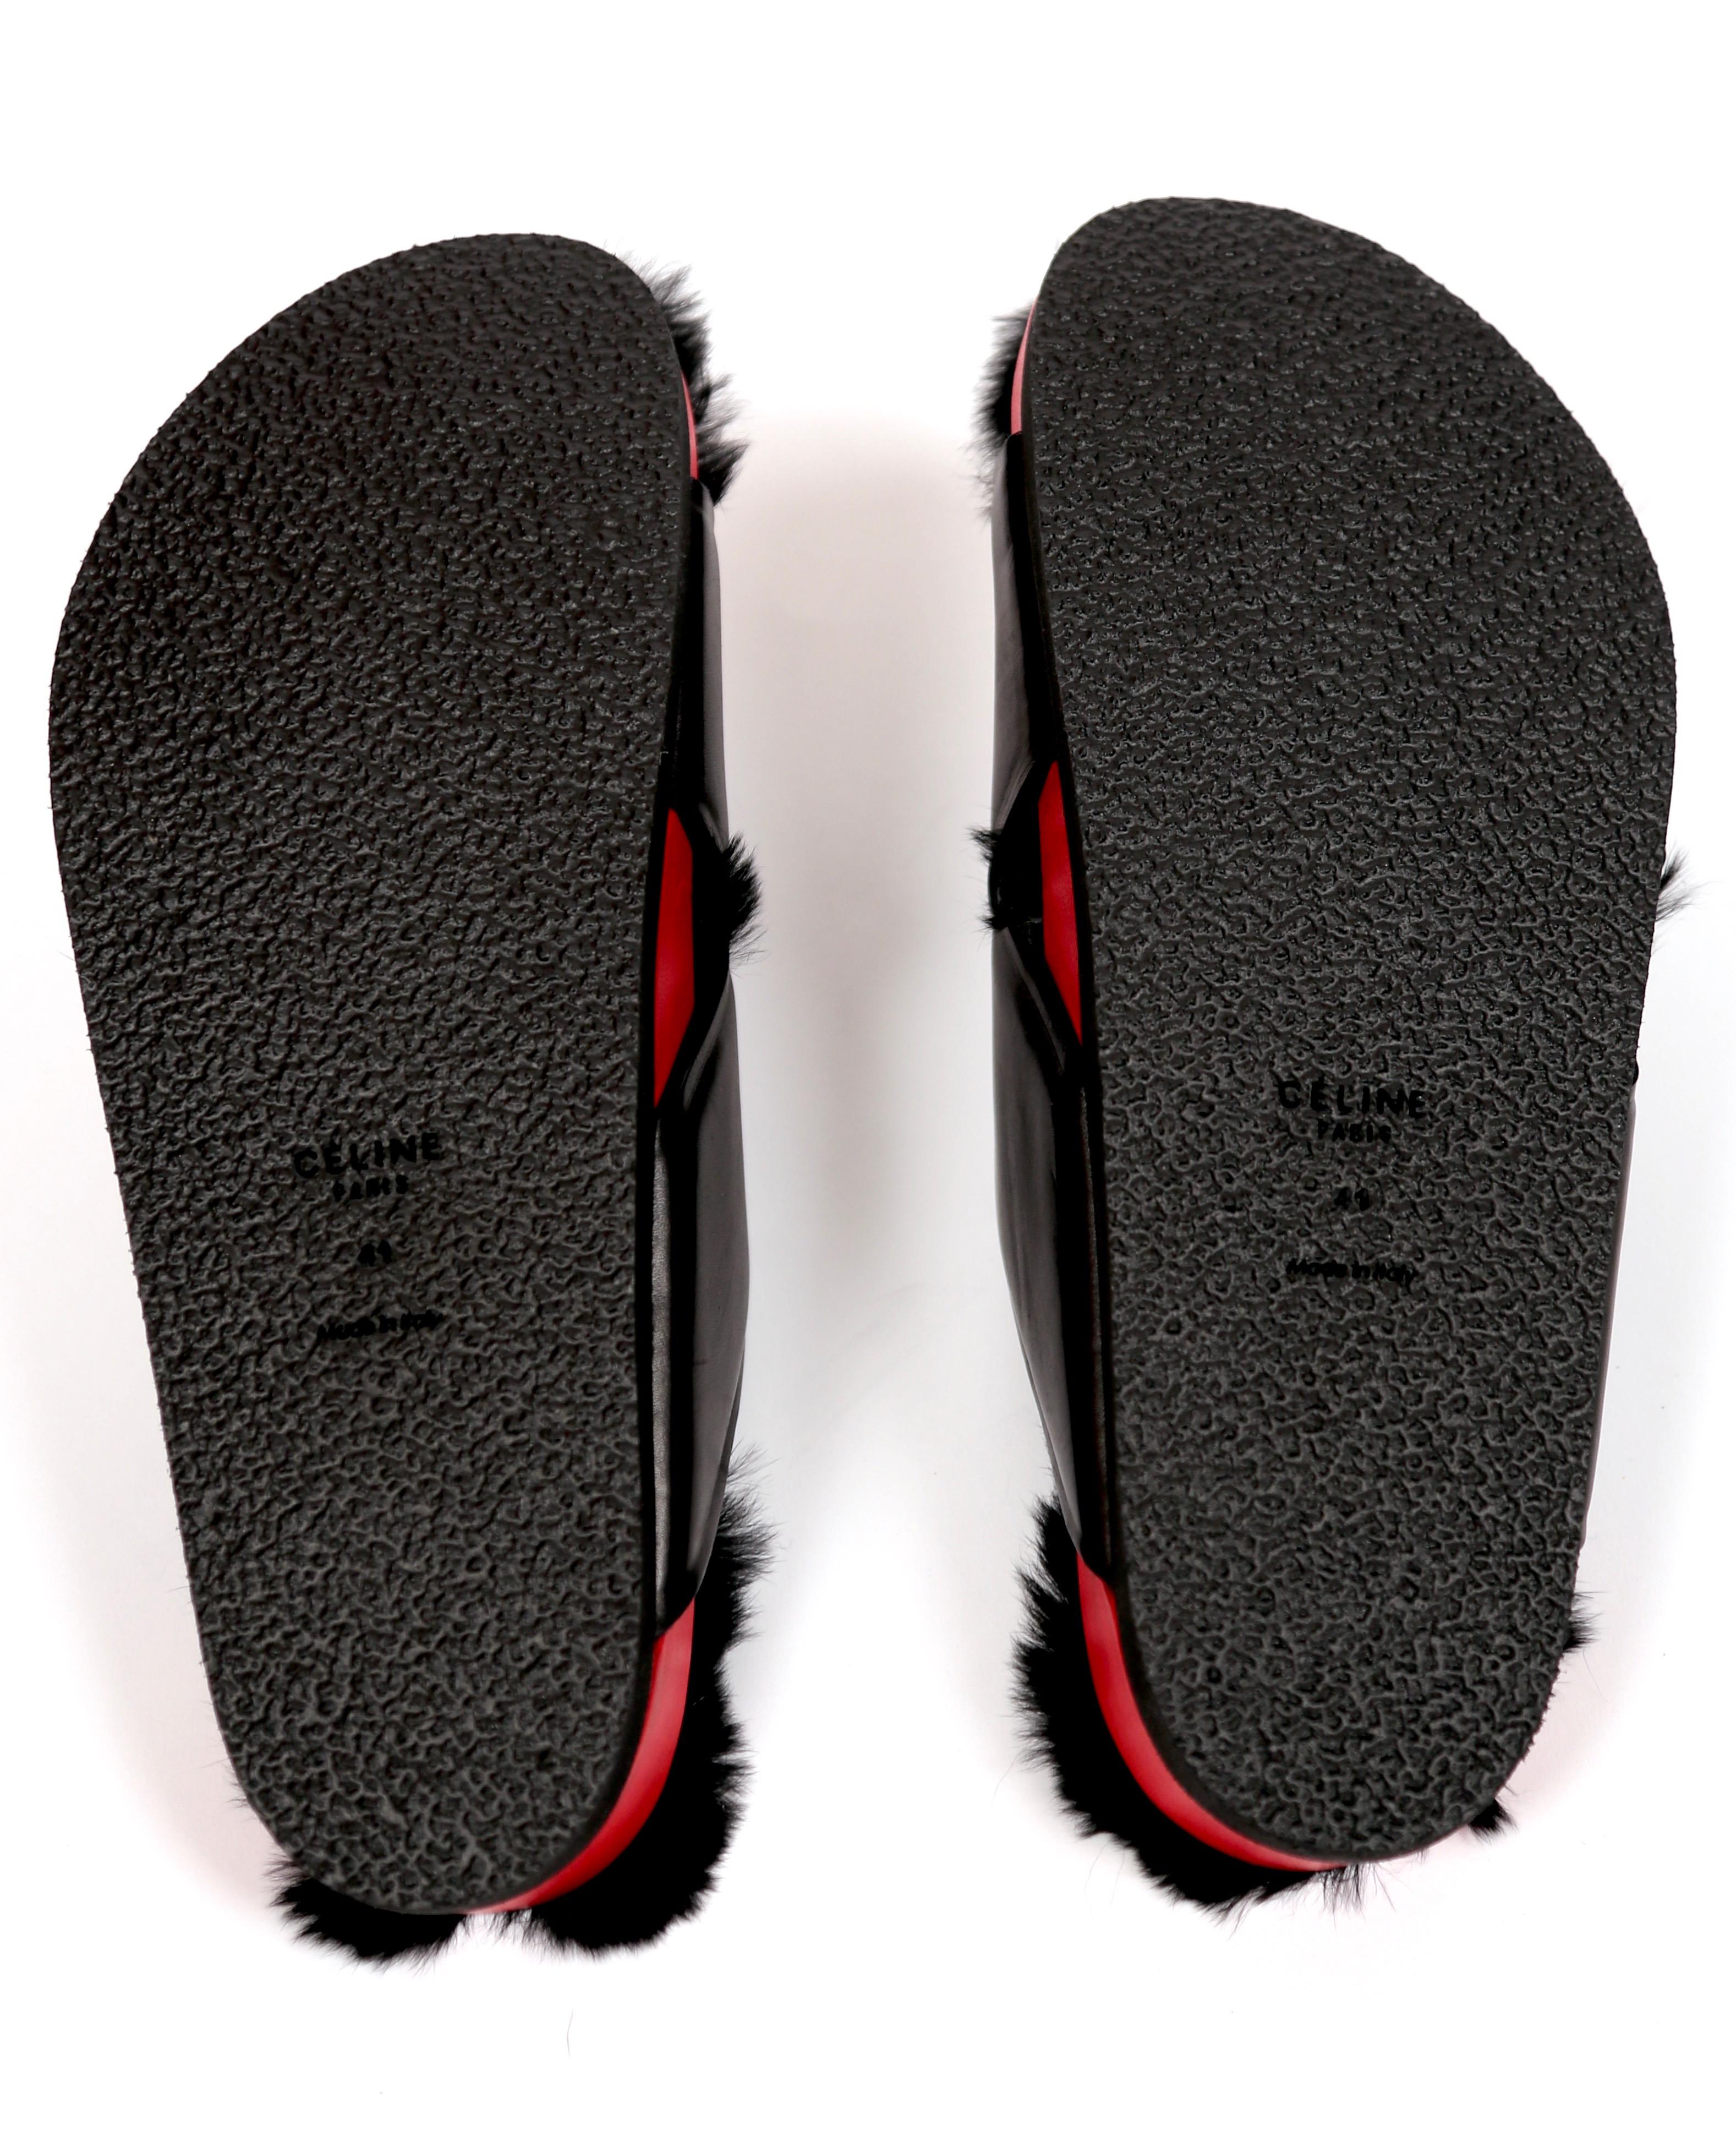 Black 2013 CELINE by PHOEBE PHILOE blac &k red furkenstock sandals 41 NEW